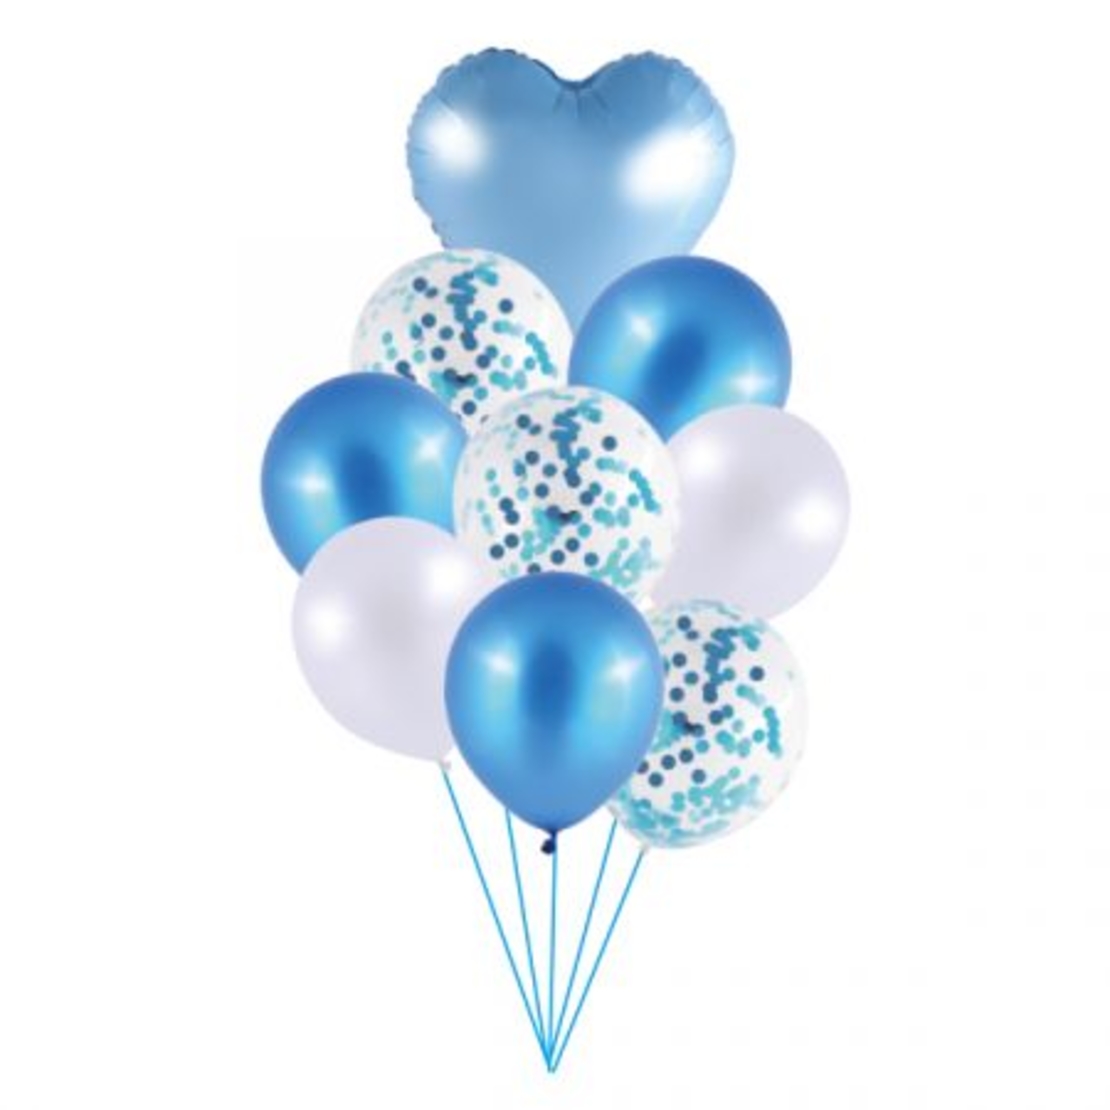 A bouquet of blue balloons